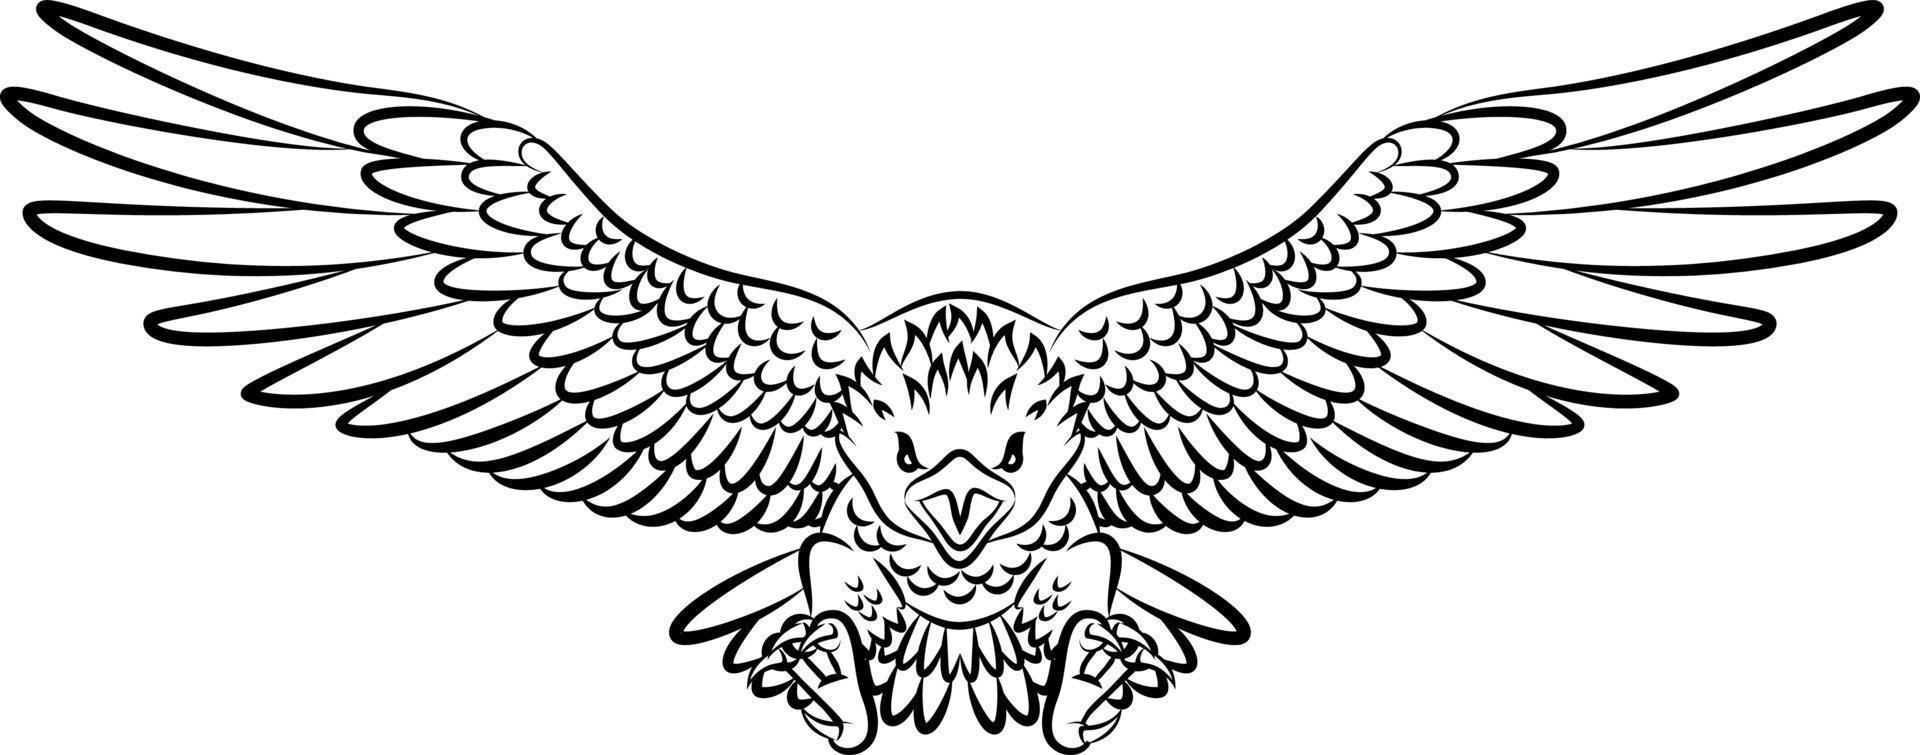 tatuaje de águila tribal aislado sobre fondo blanco vector